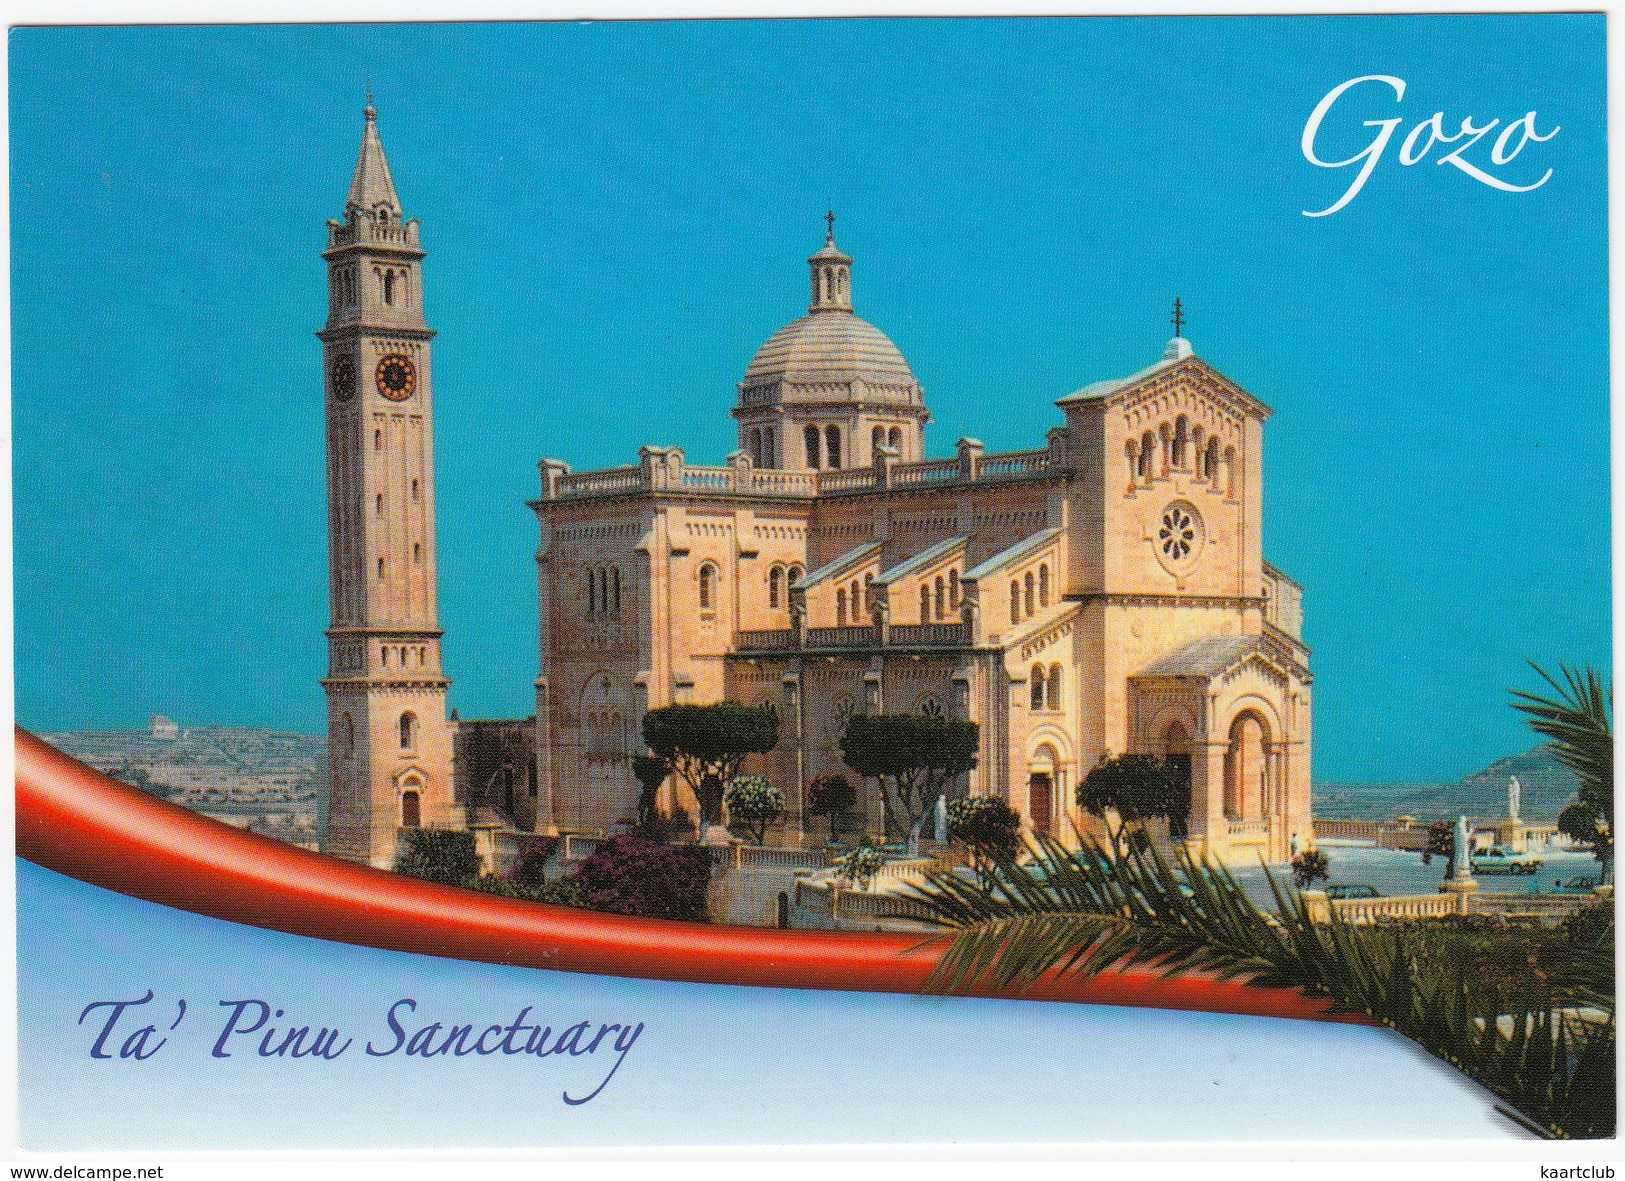 Gozo - Ta' Pinu Sanctuary - (Malta) - Malta